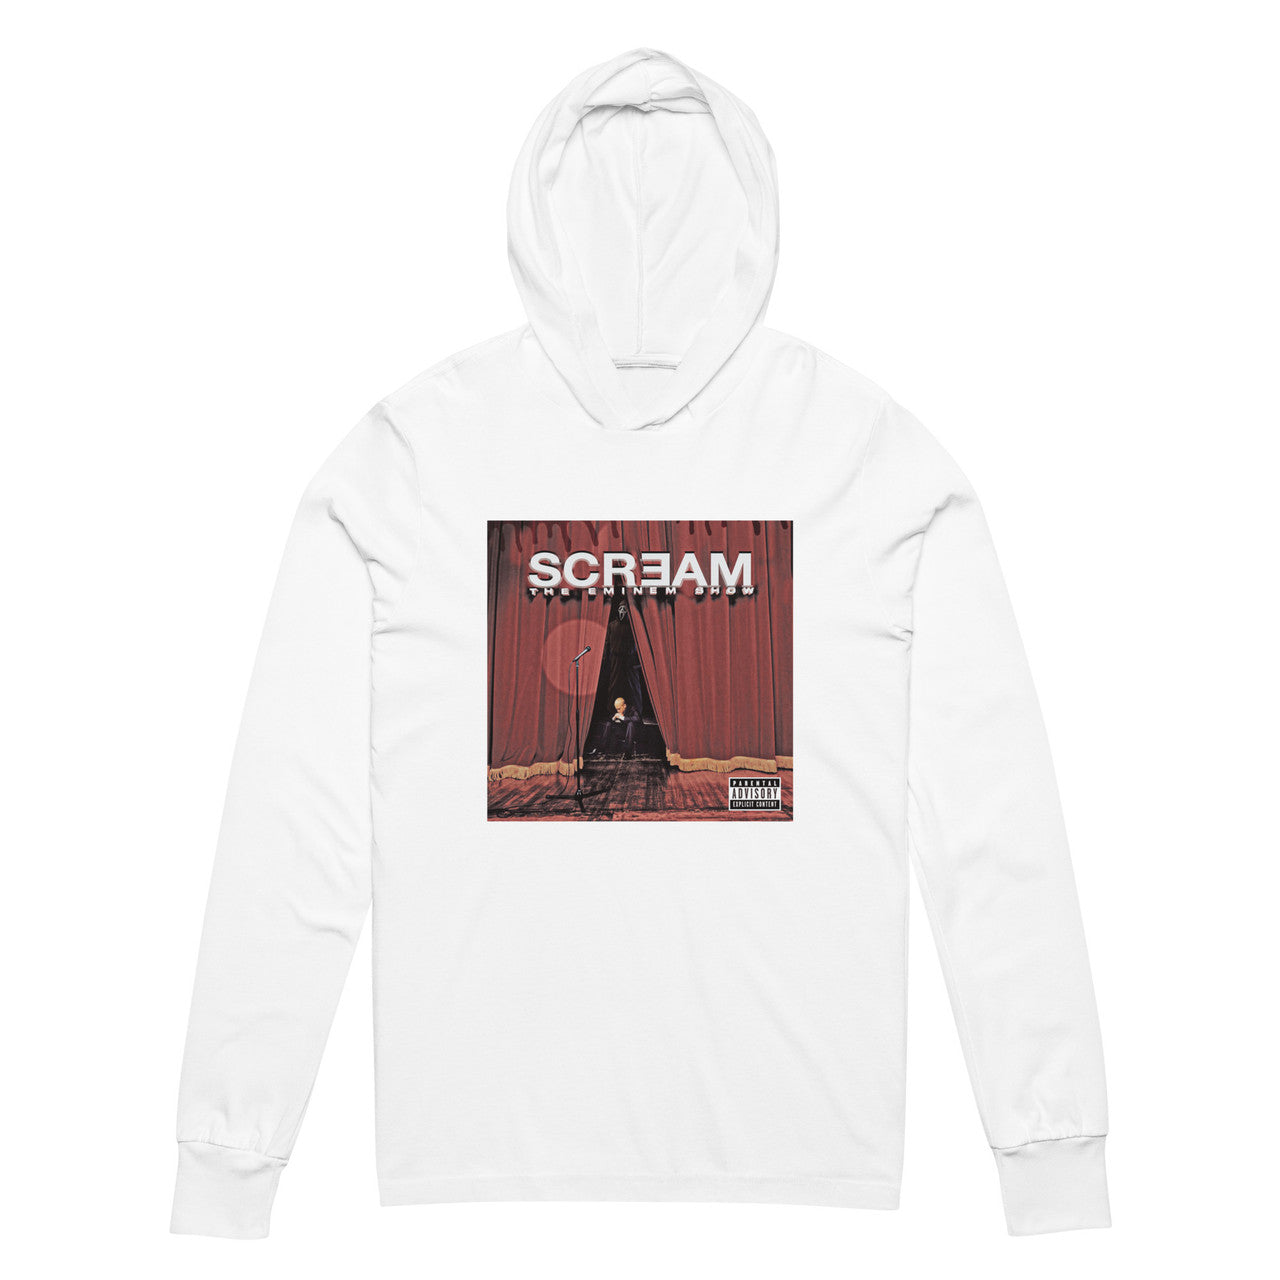 Scream Show KiSS Hooded long-sleeve tee - Eminem Marshall slasher music movie cross